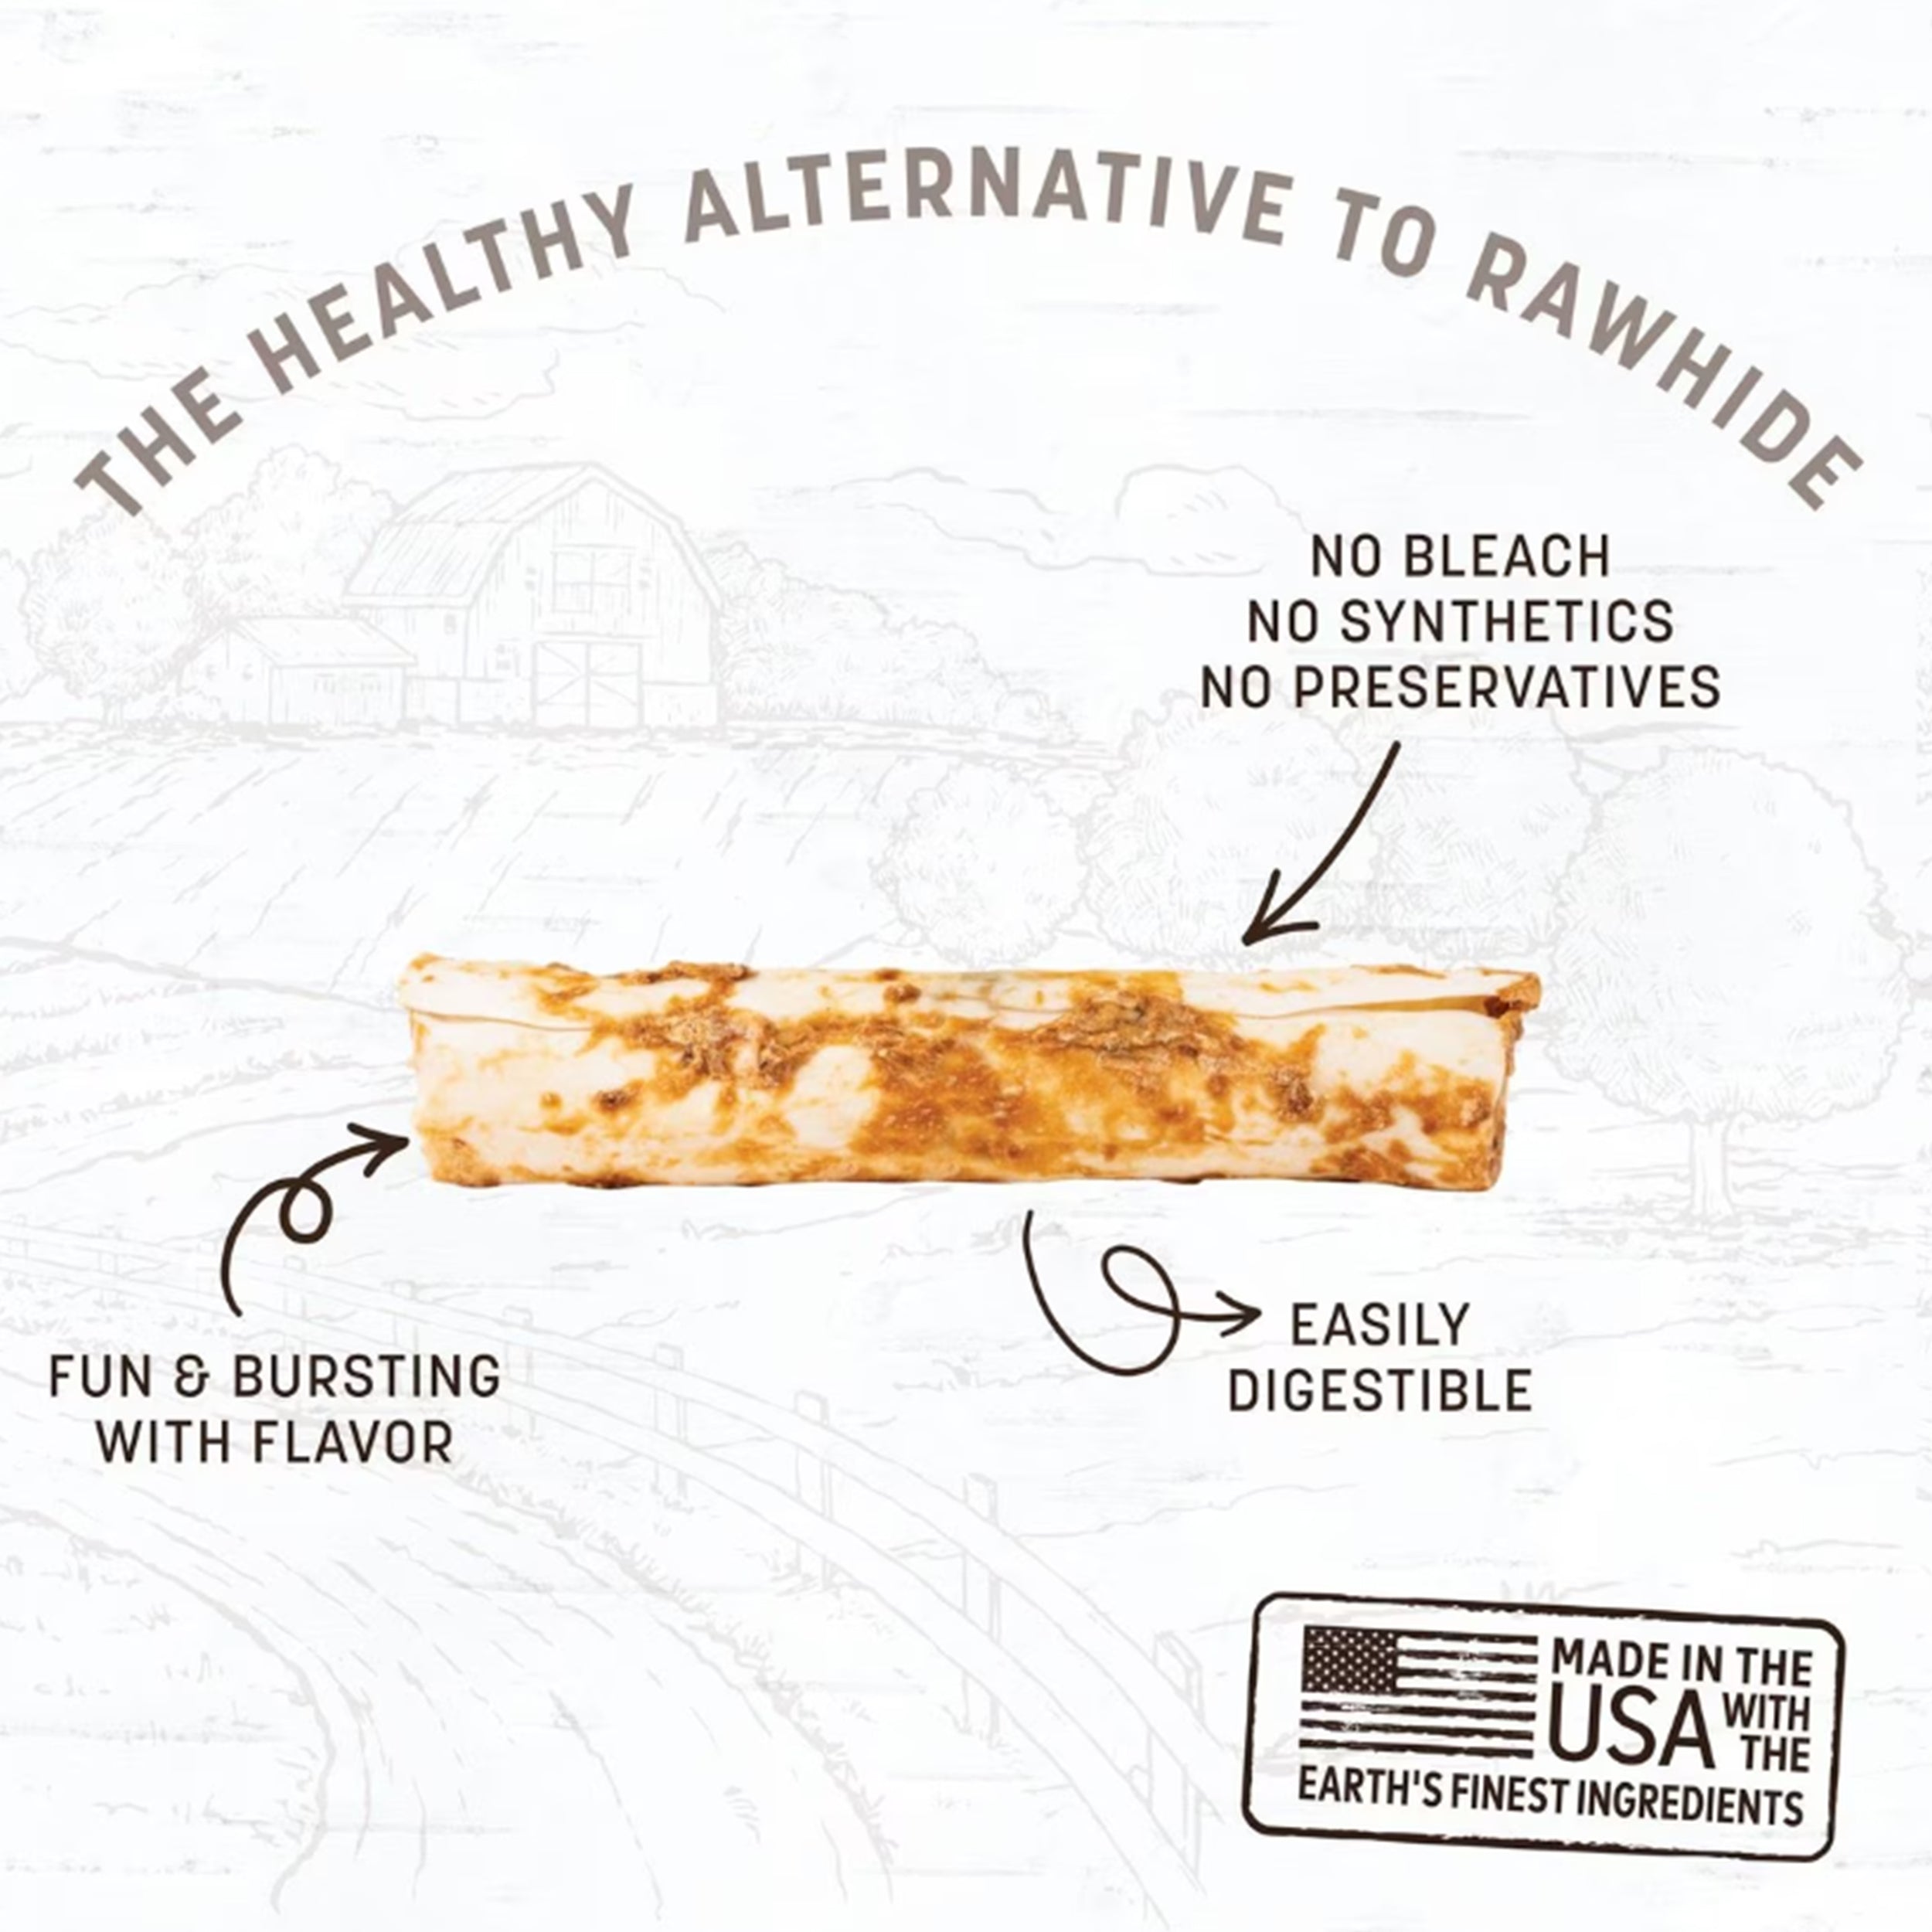 Earth Animal No-Hide Rolls Long Lasting Natural Rawhide Alternative Peanut Butter Vegetarian Recipe Chew Dog Treats